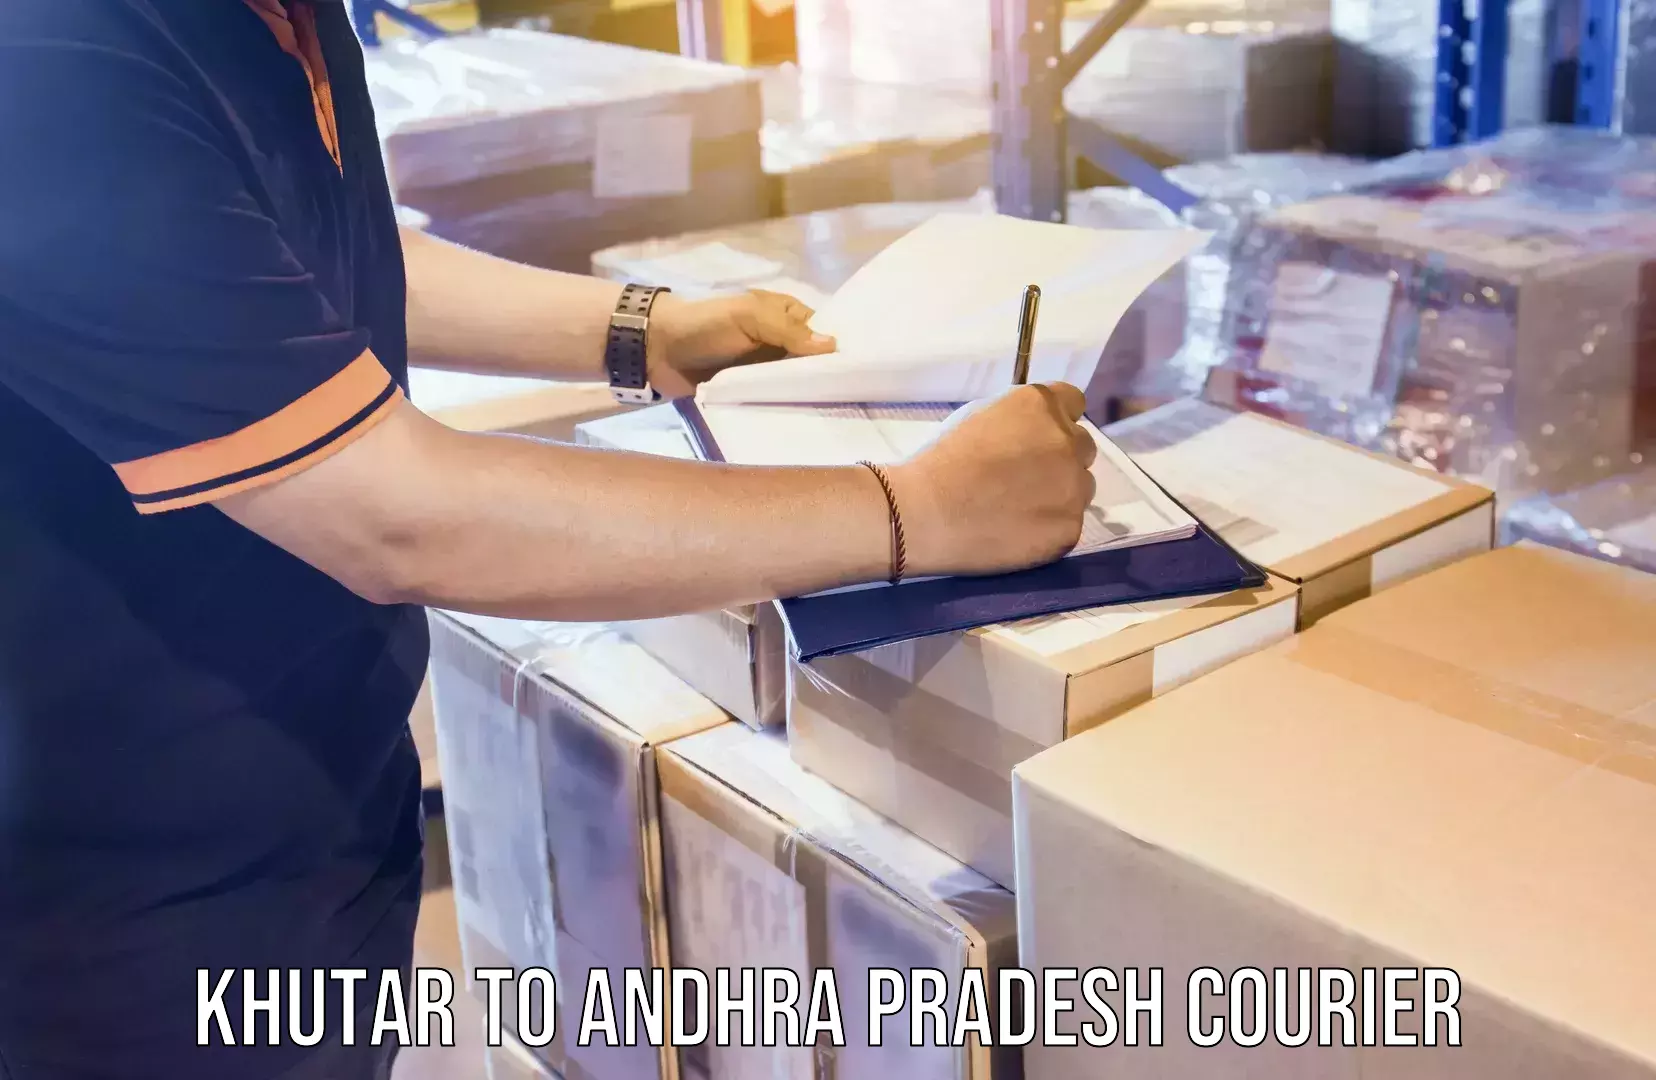 Quality moving company Khutar to Andhra Pradesh